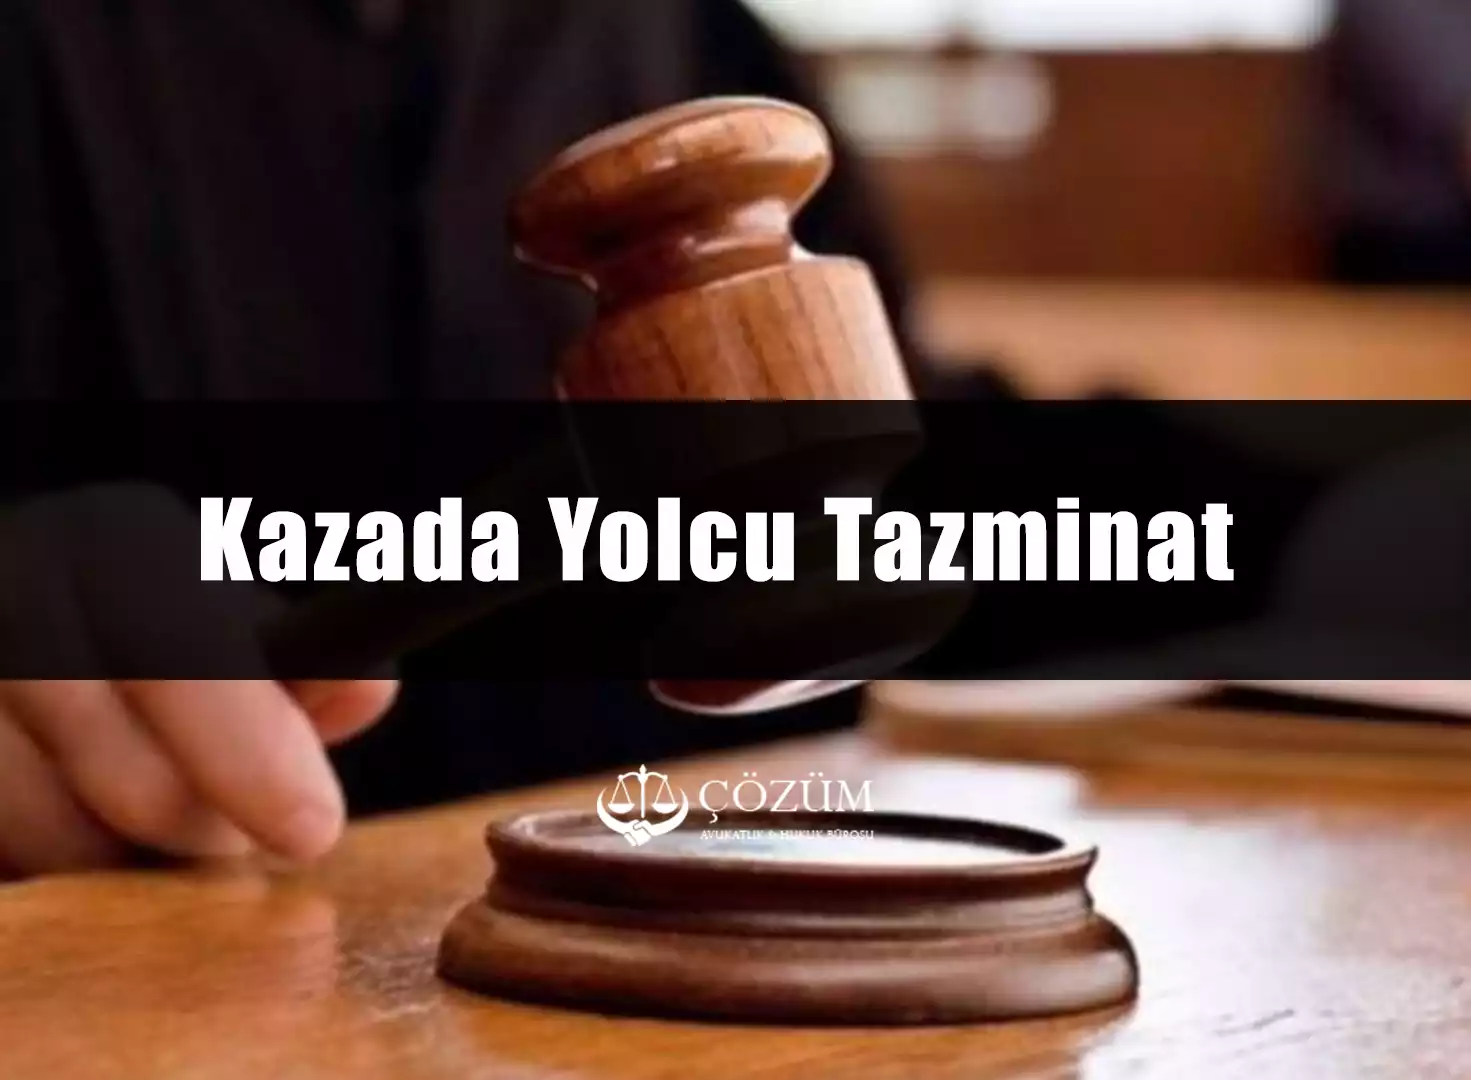 Kazada Yolcu Tazminat